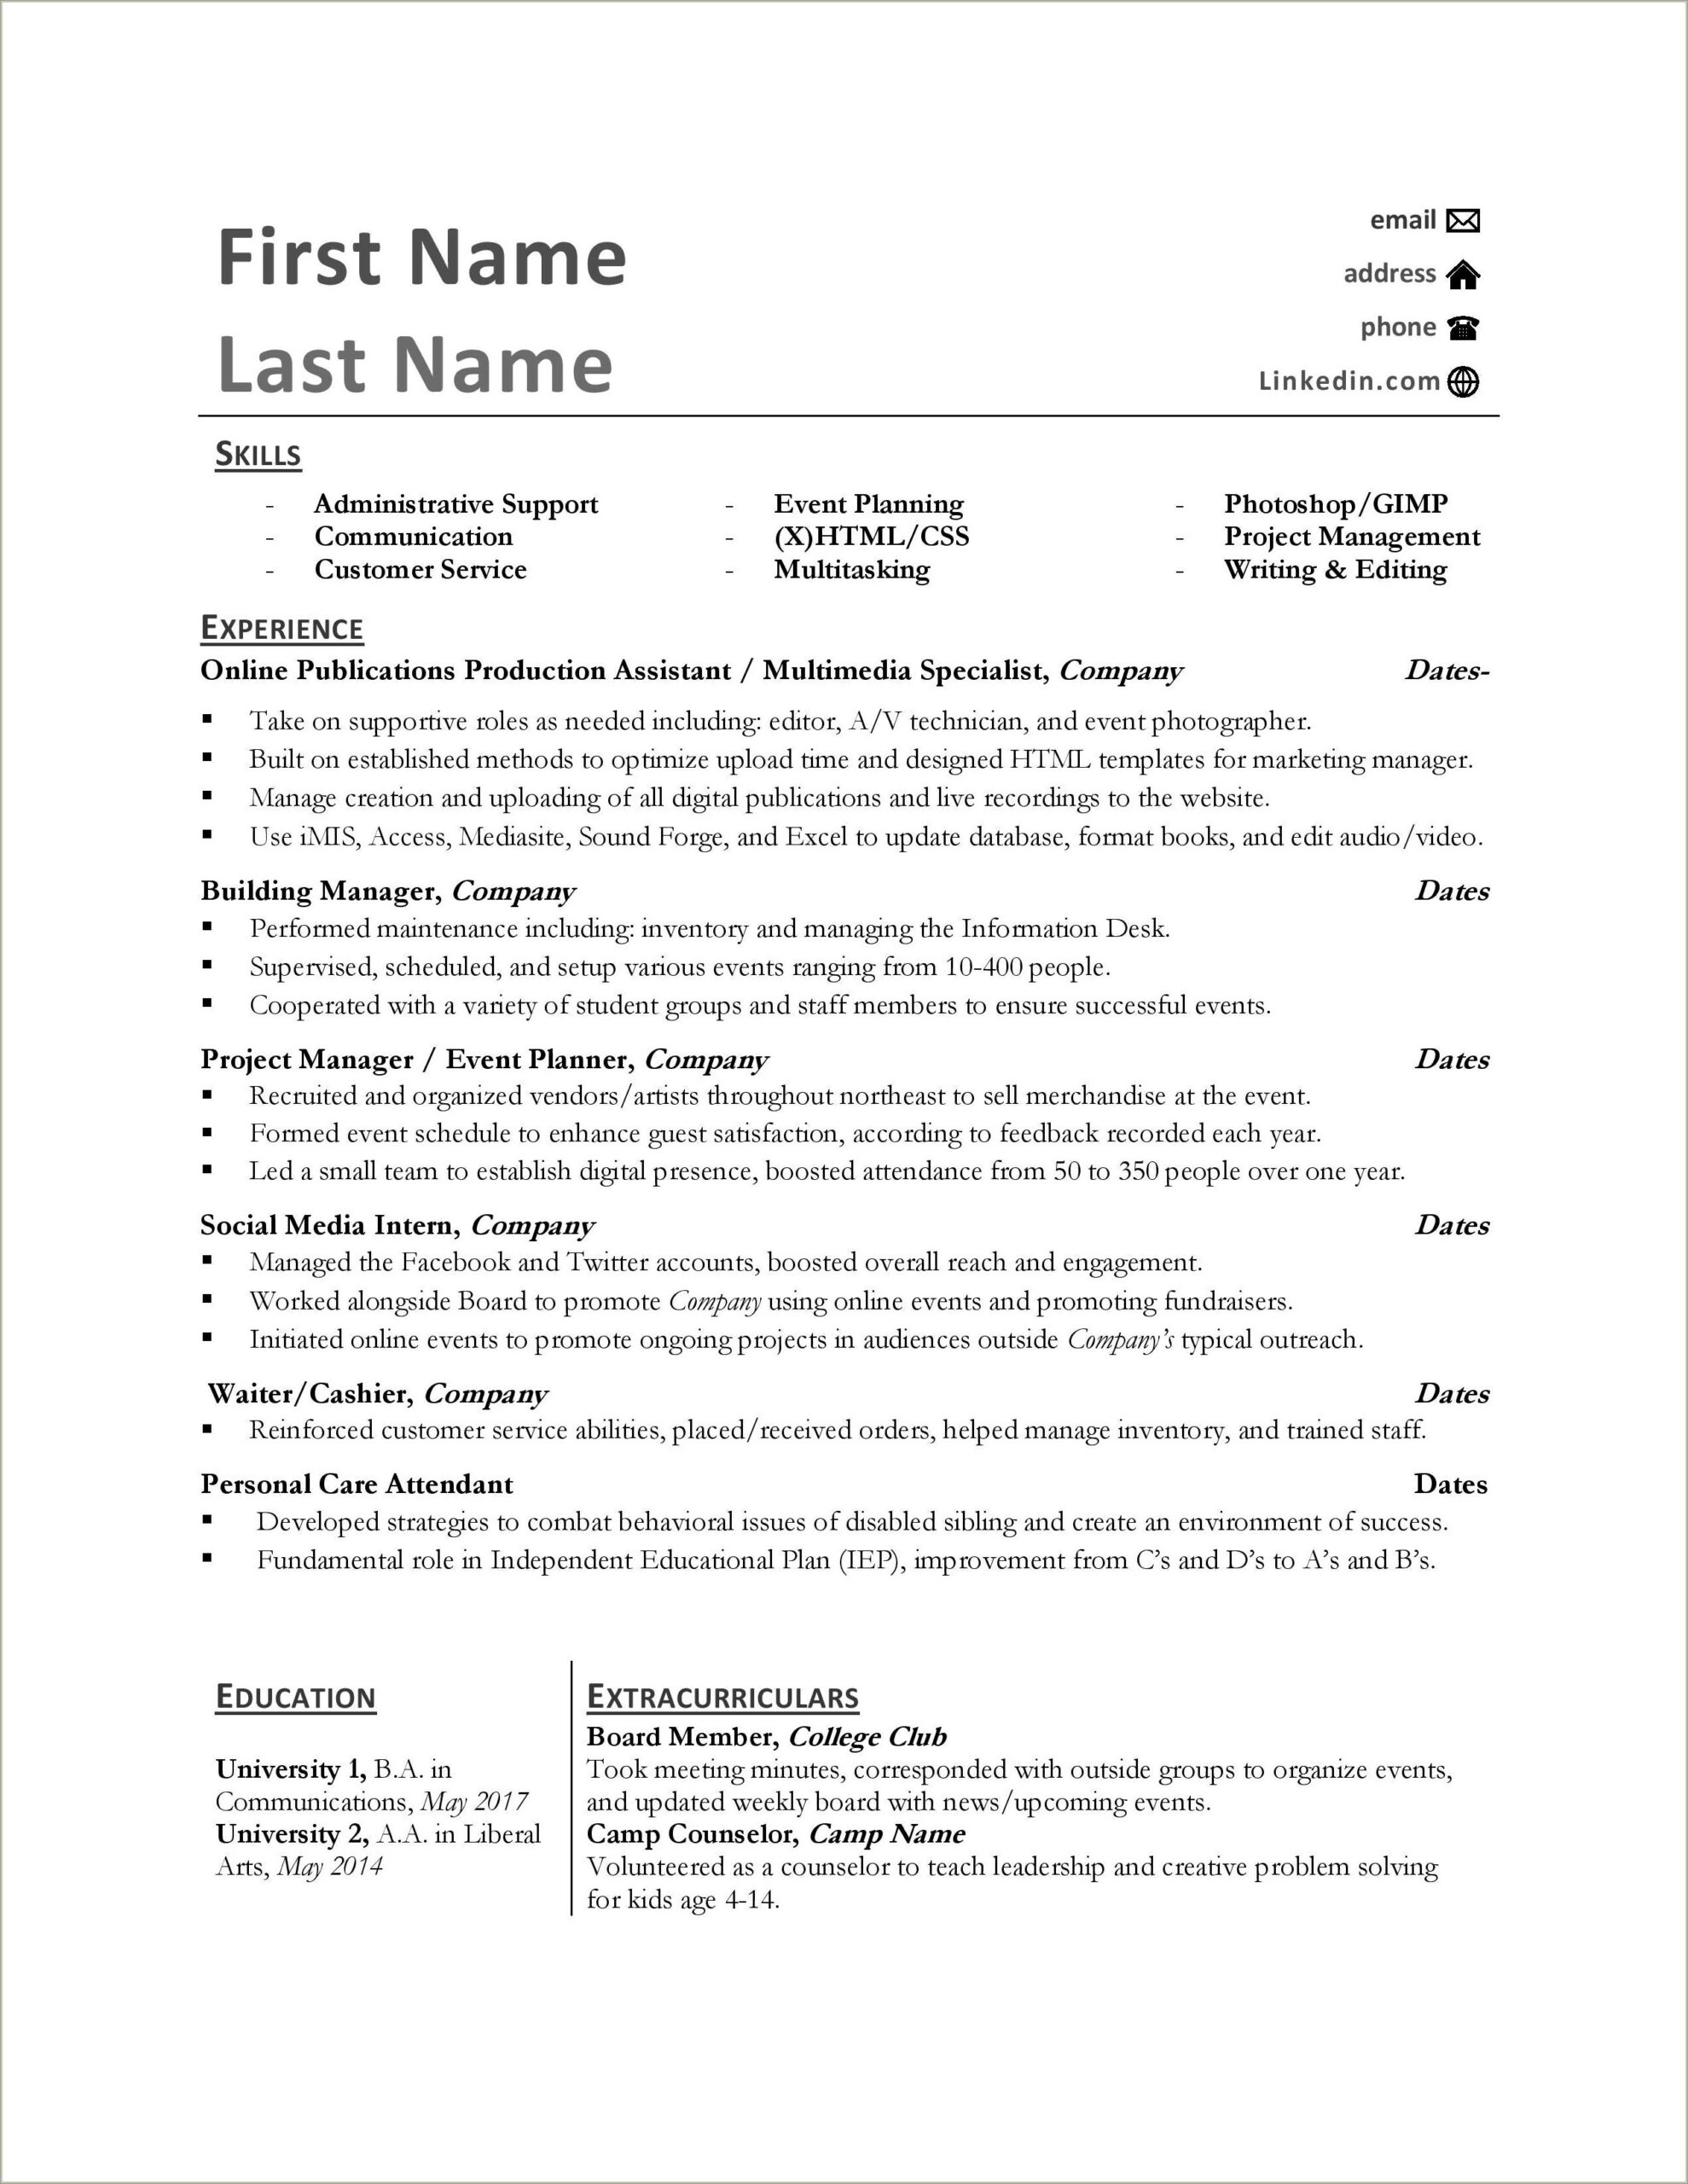 Example Resume Multiple Jobs Same Company